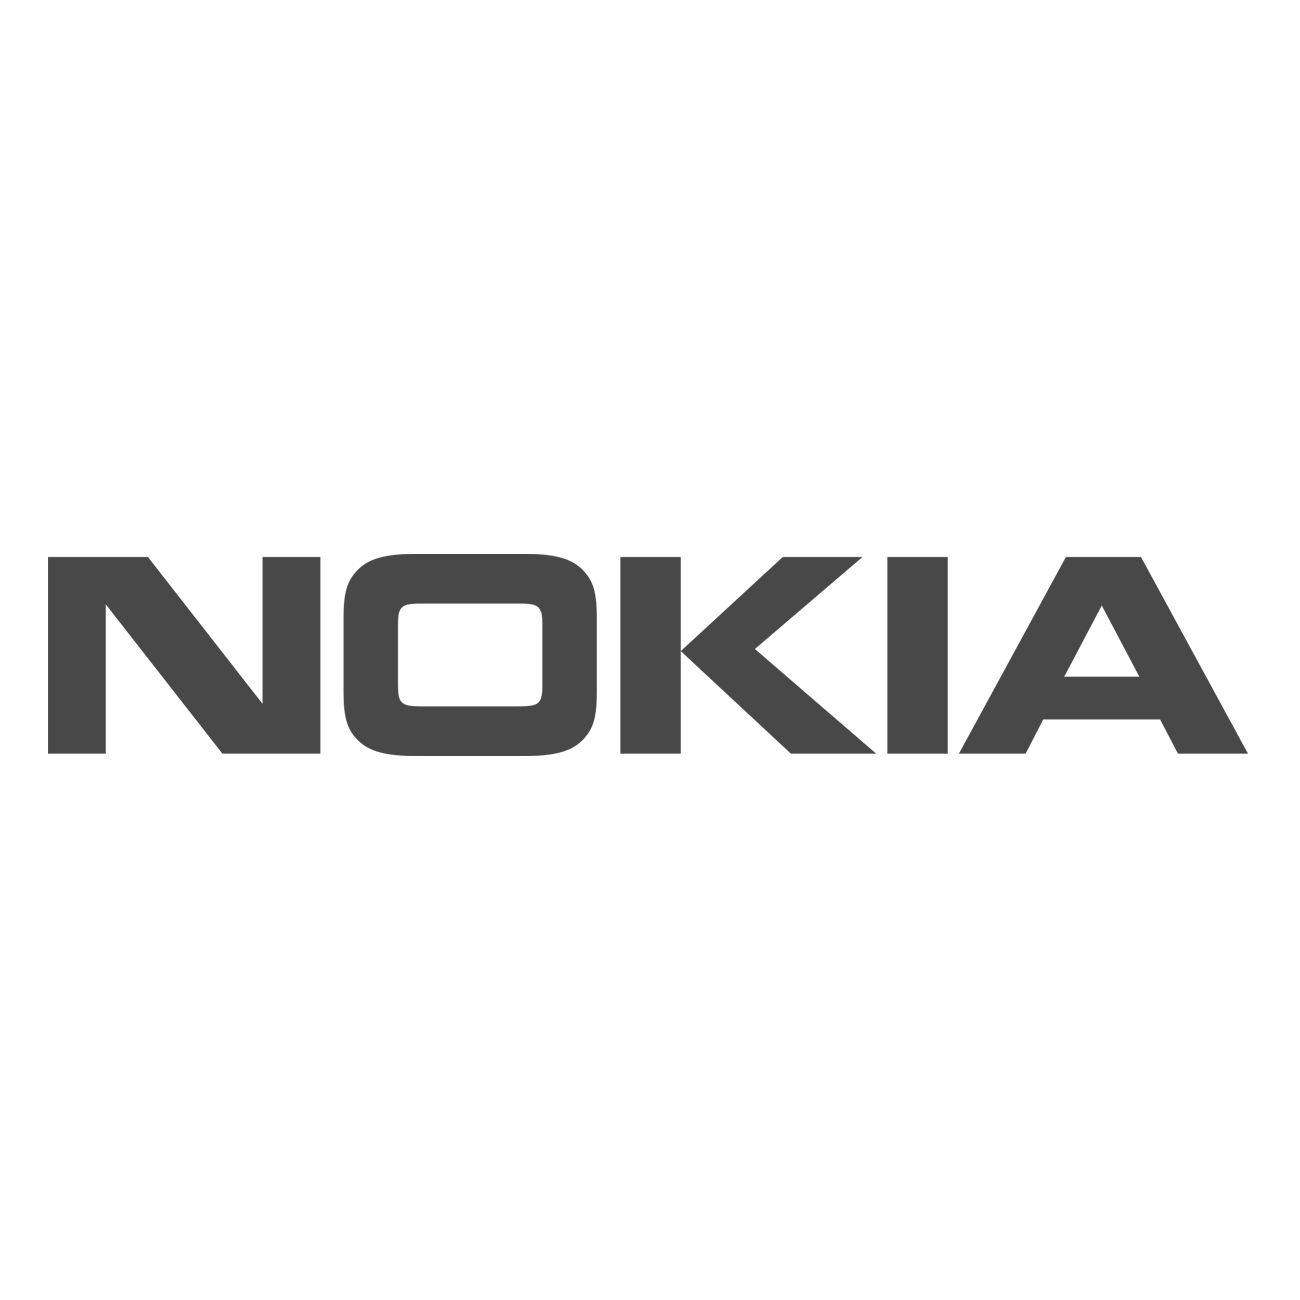 Nokia Transparent Image